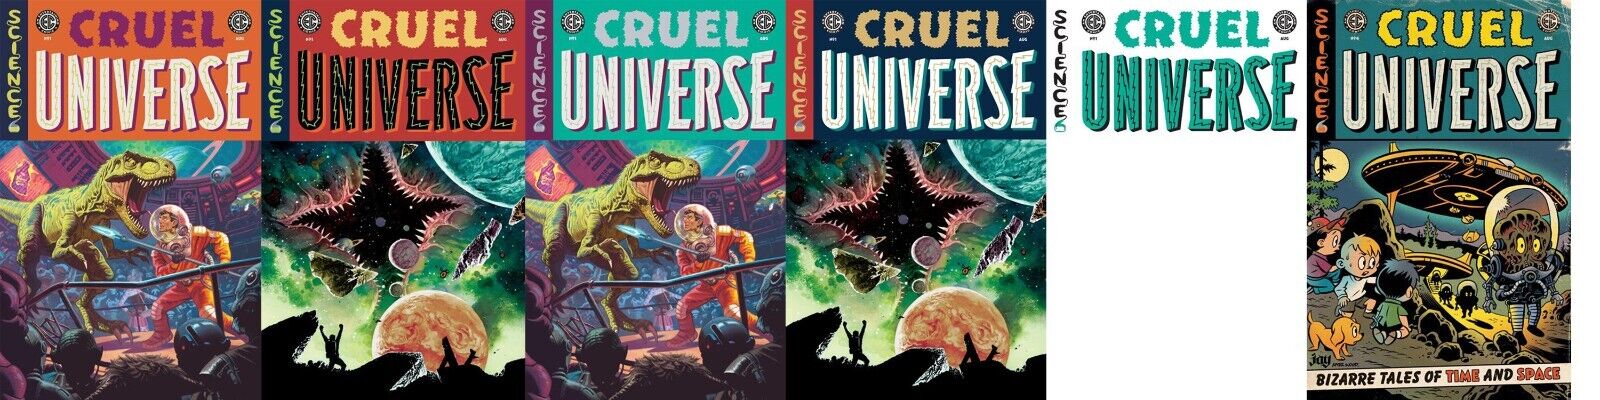 EC CRUEL UNIVERSE #1 NM 6 COVER SET 1:10 SILVER GOLD FOILS PRESALE 